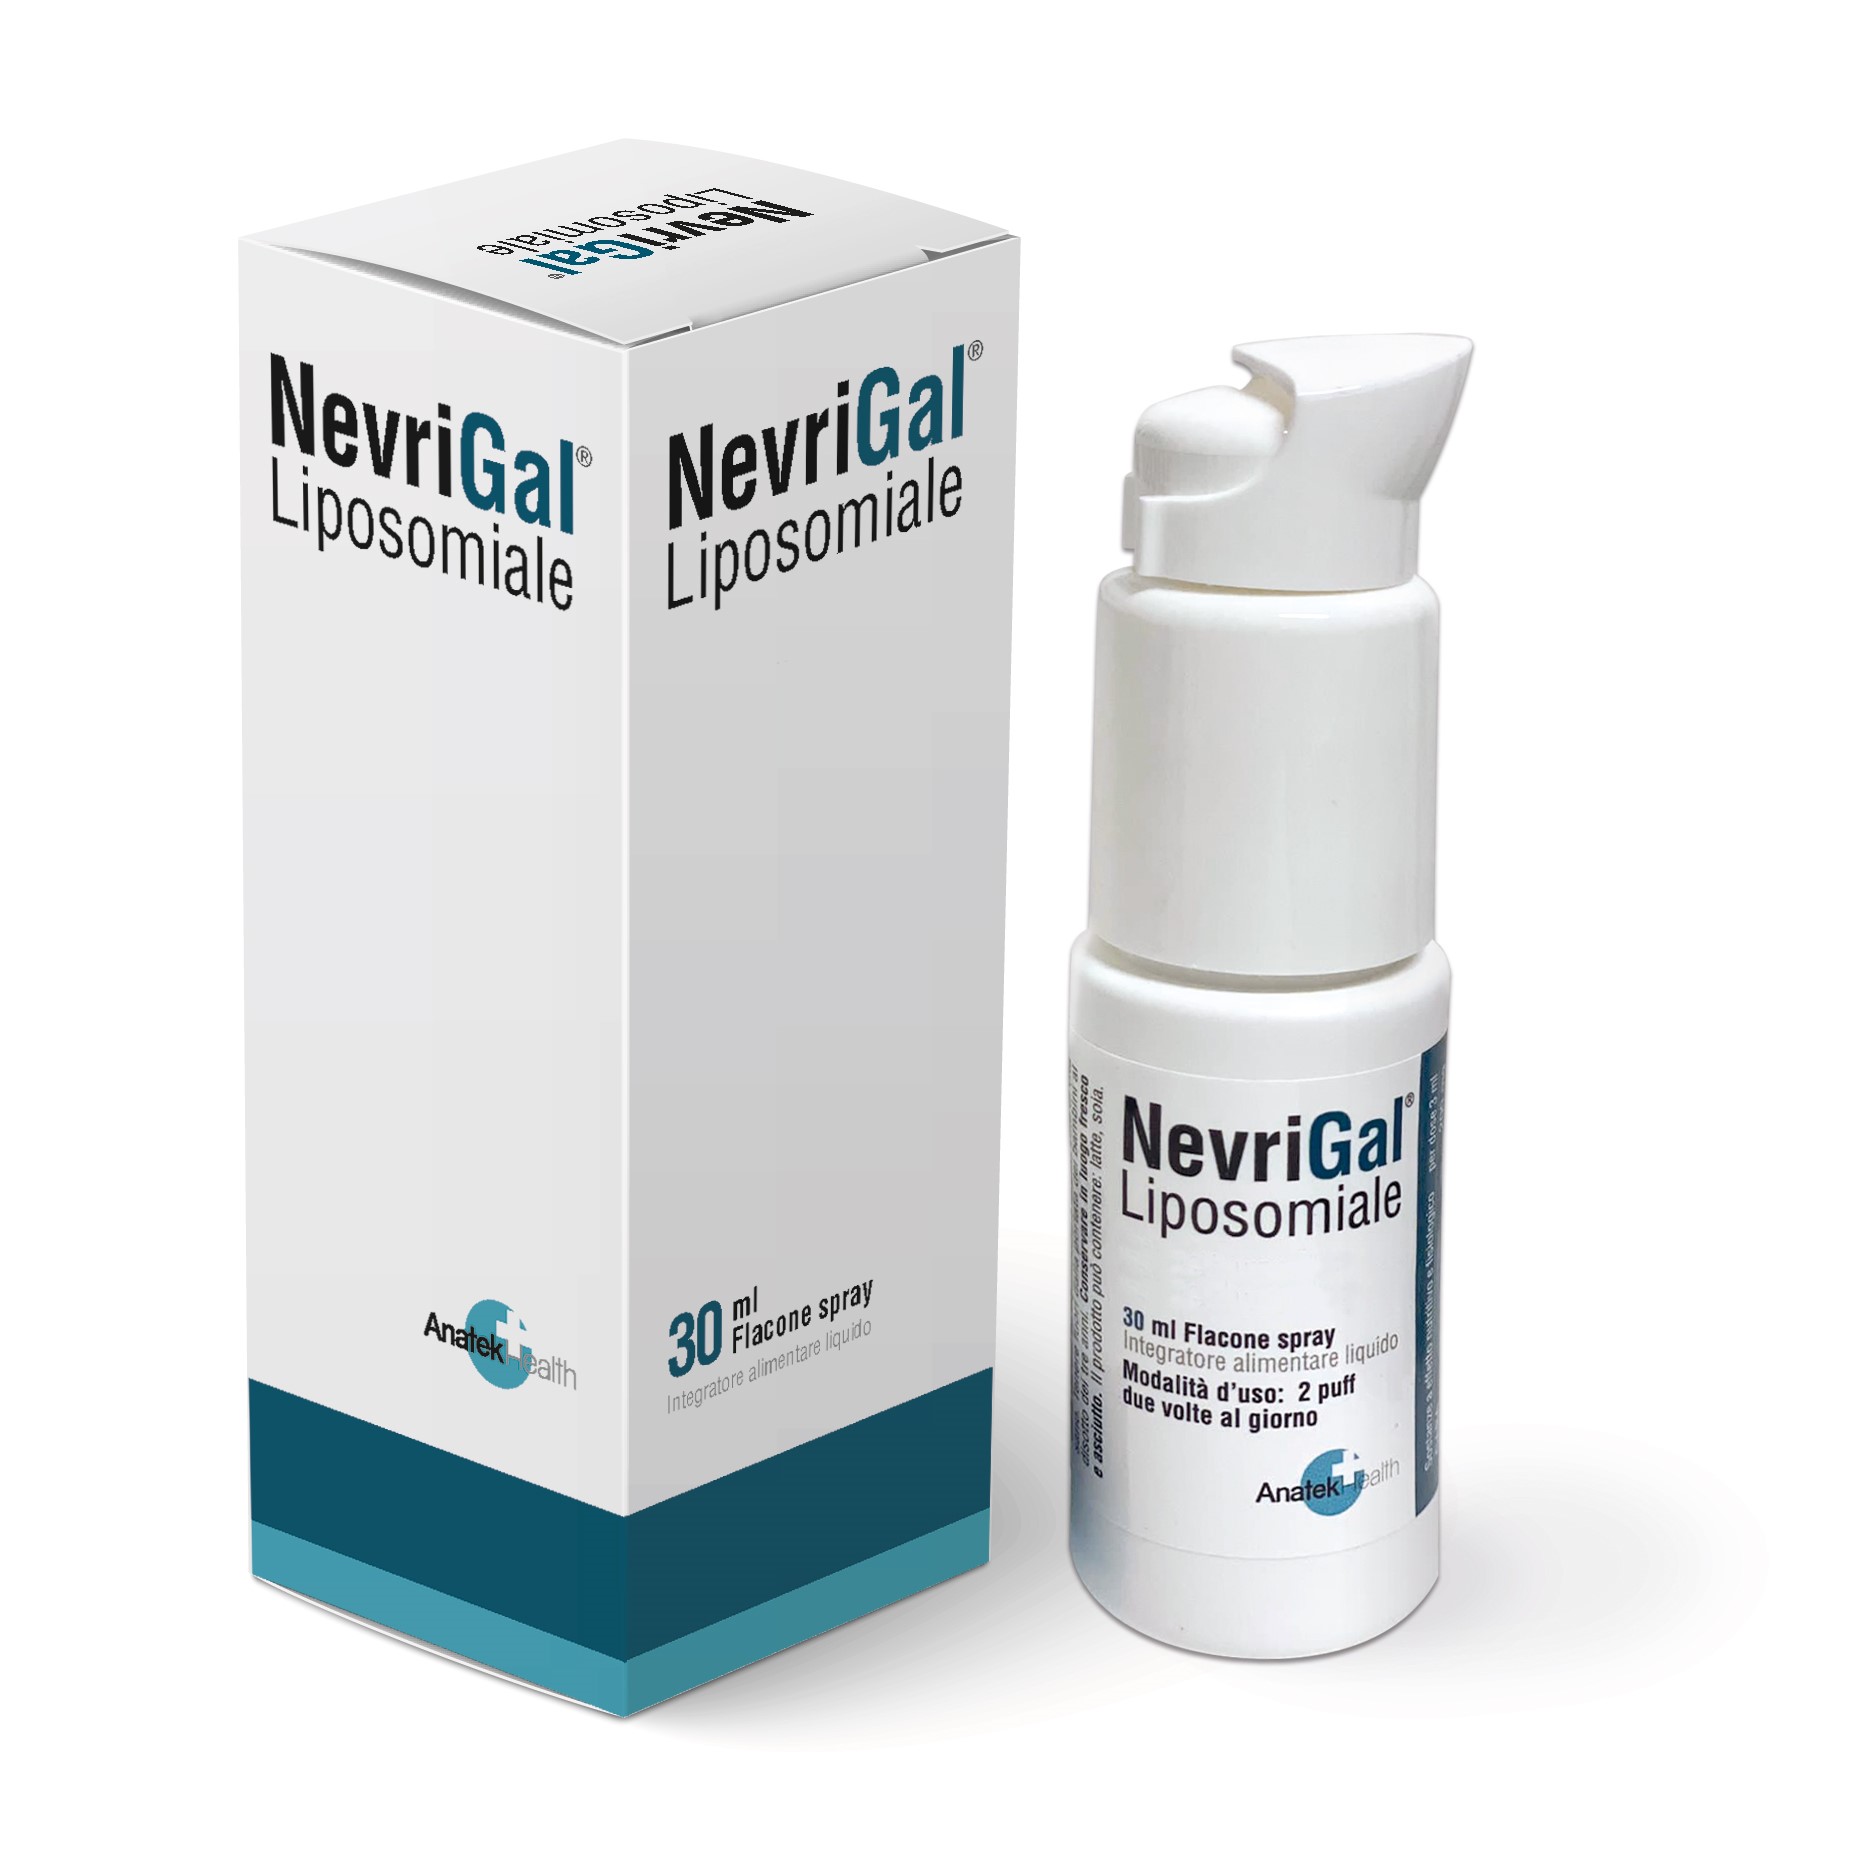 NevriGal(R) LipoSomiale Anatek Health 30ml